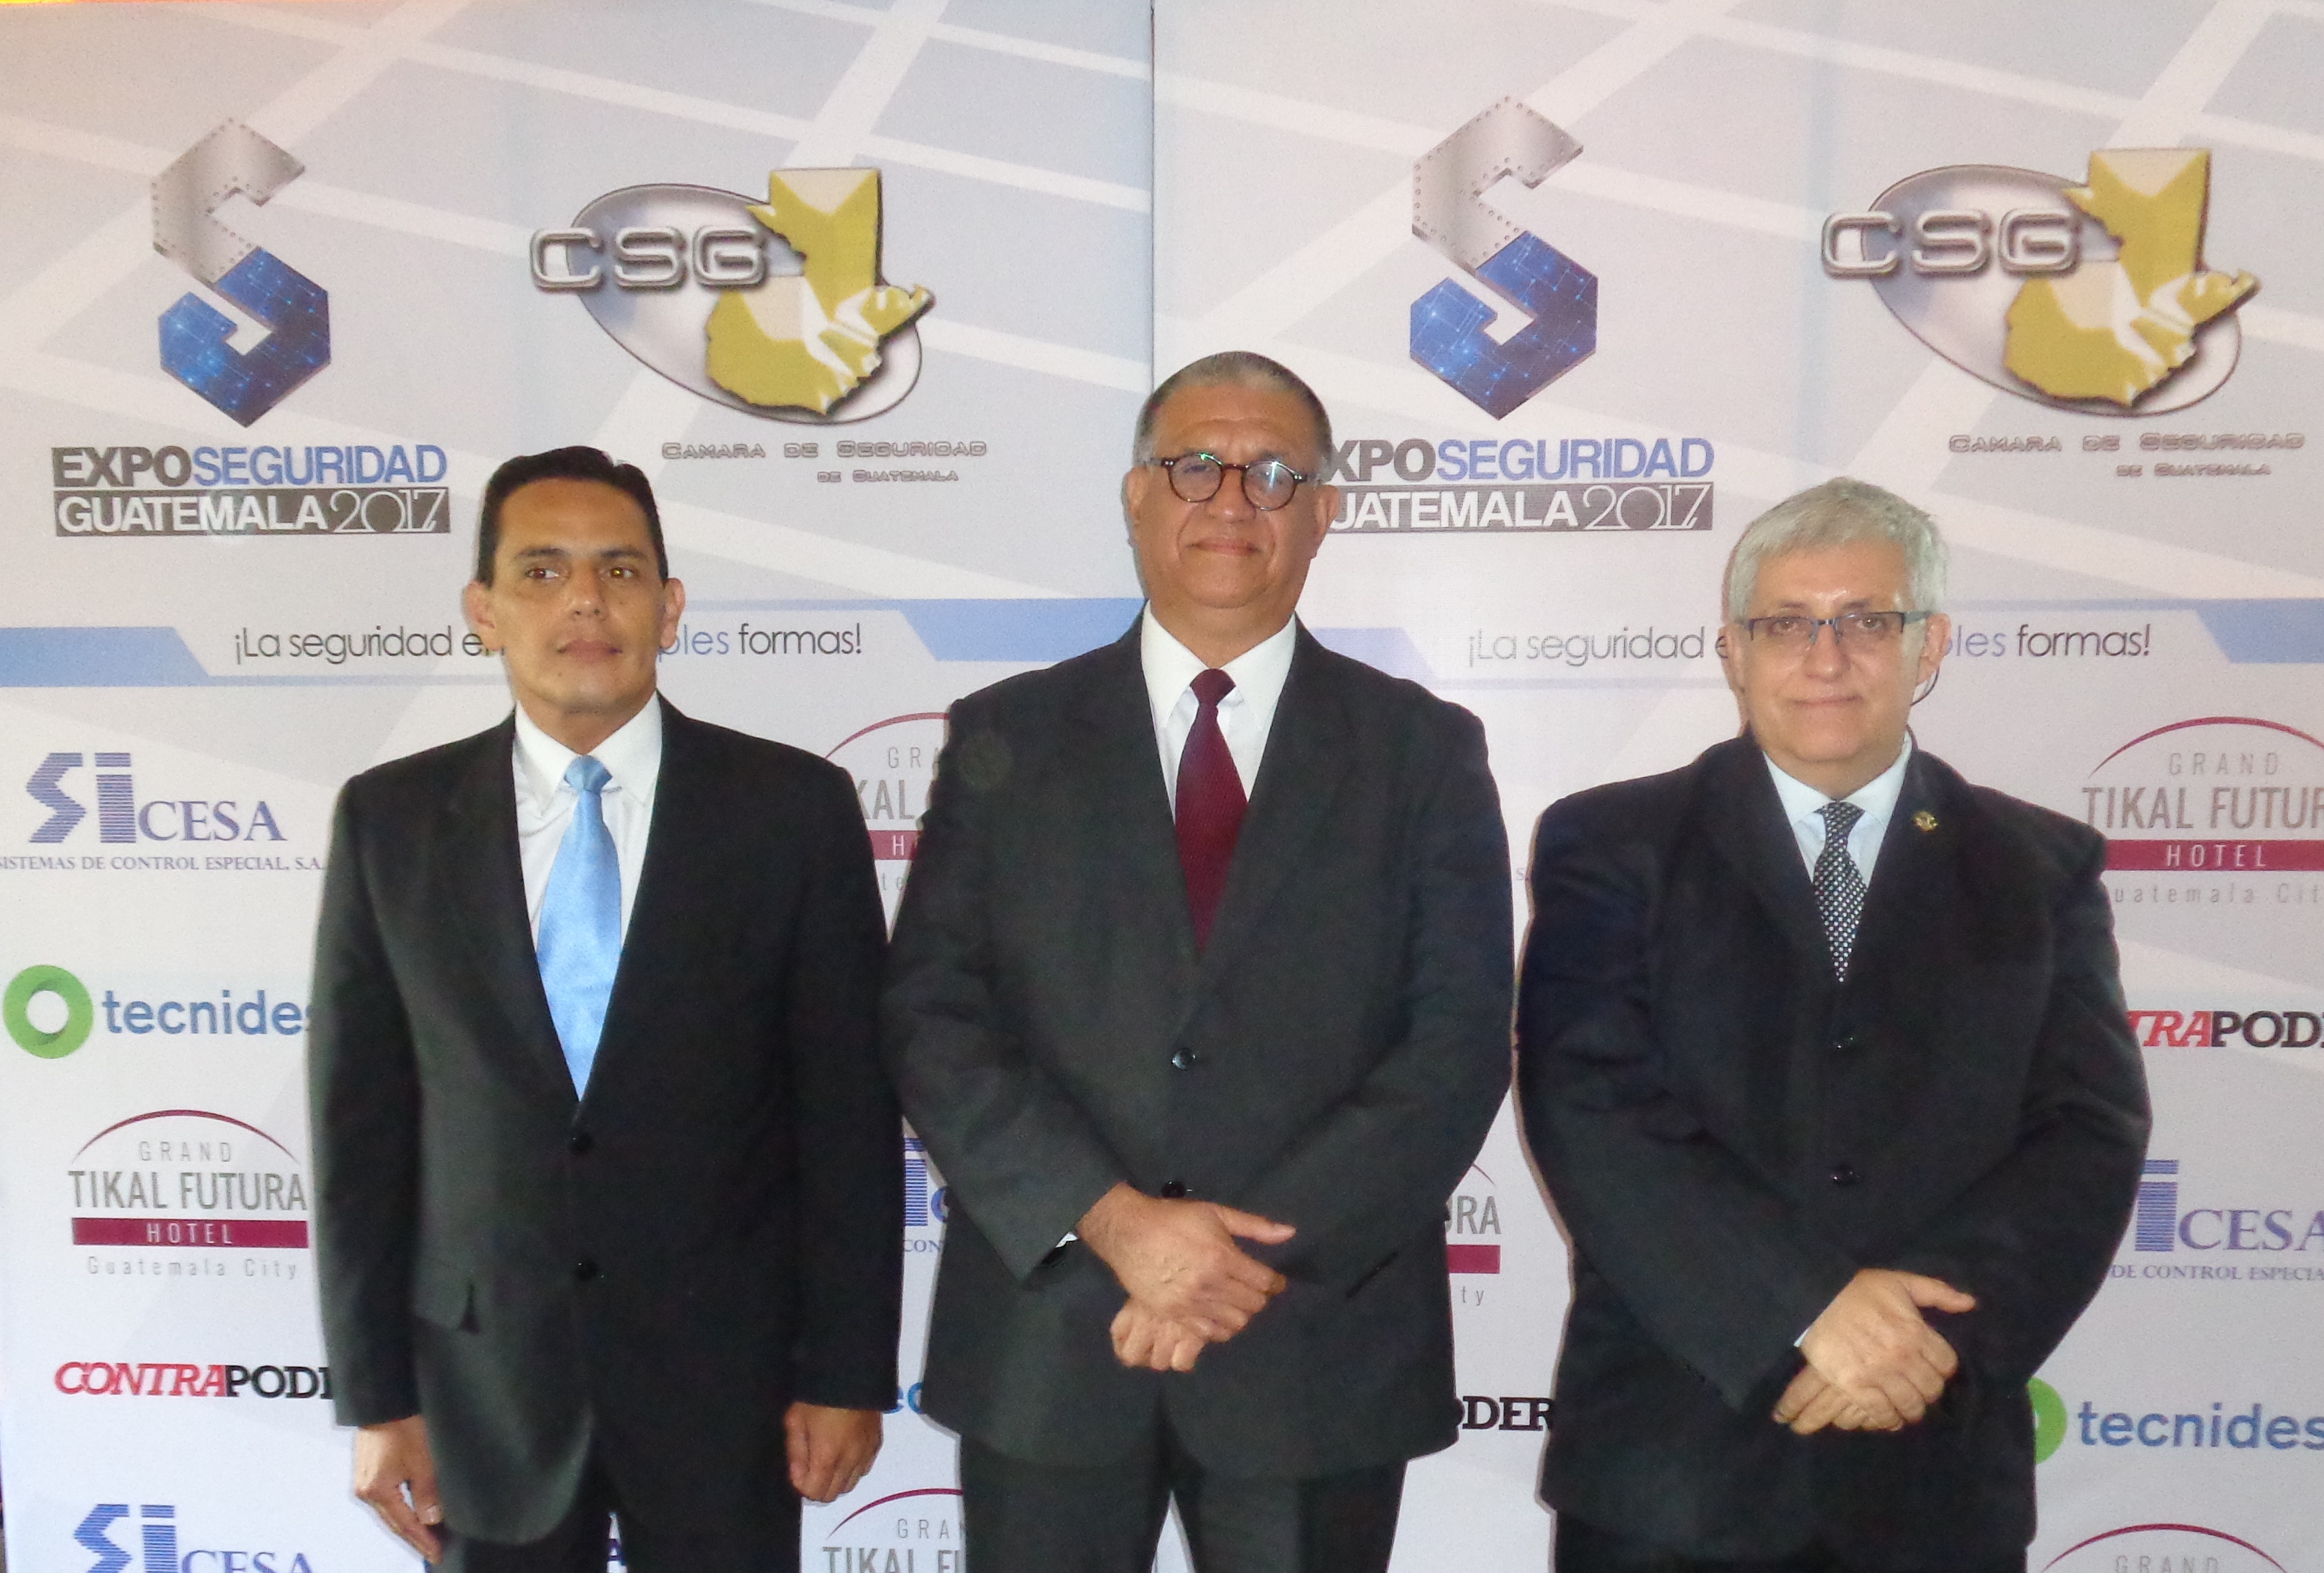 Exposeguridad Guatemala 2017